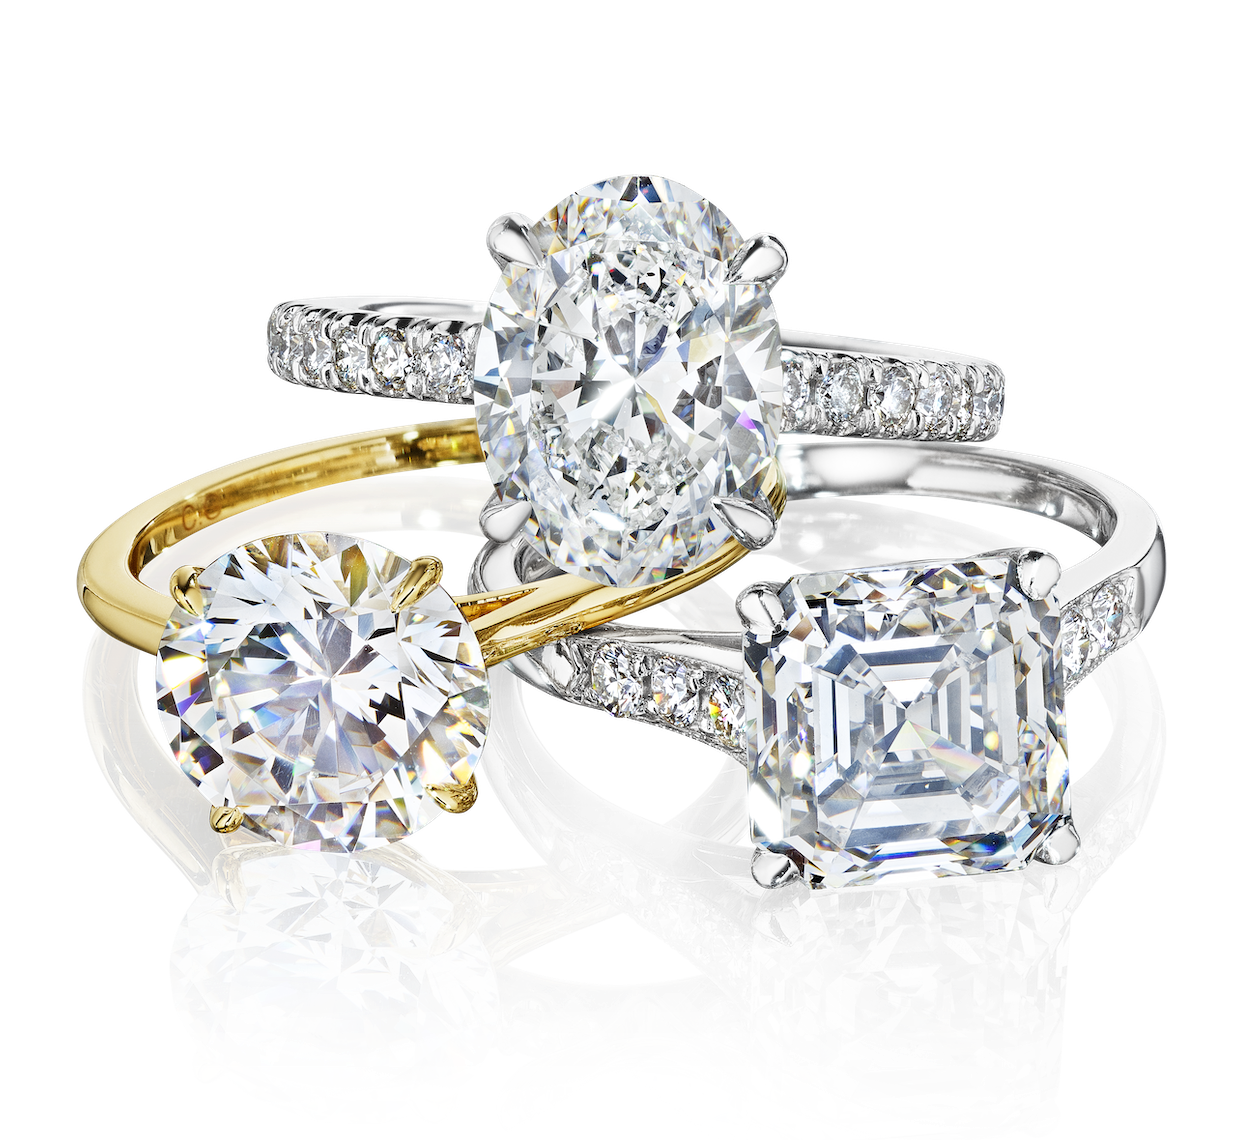 Three diamond engagement rings from luxury jeweler, Zadok Jewelers in Houston, TX.